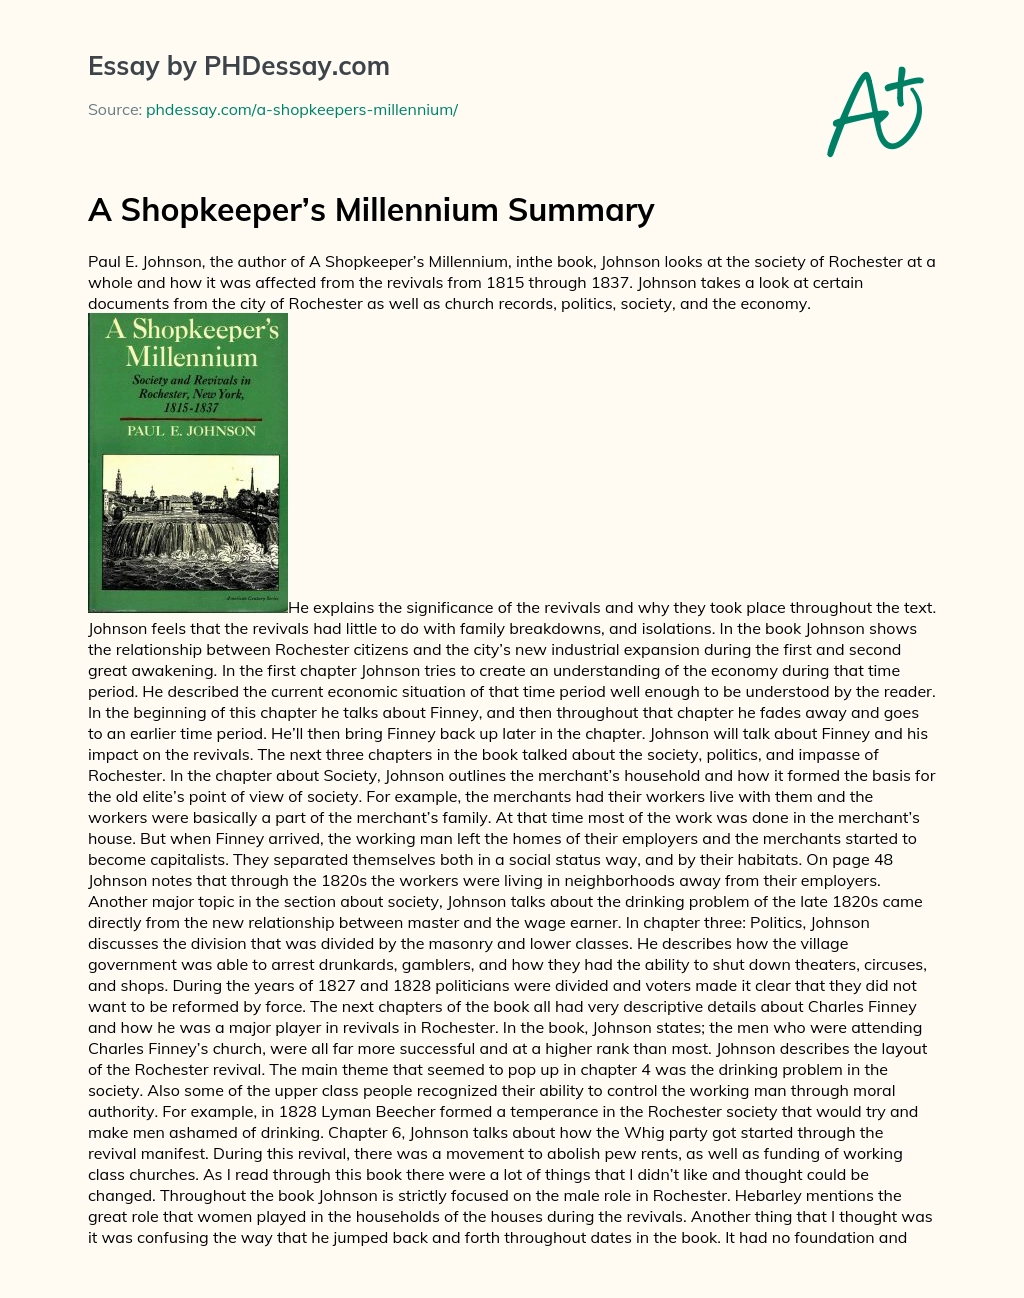 A Shopkeeper’s Millennium Summary essay